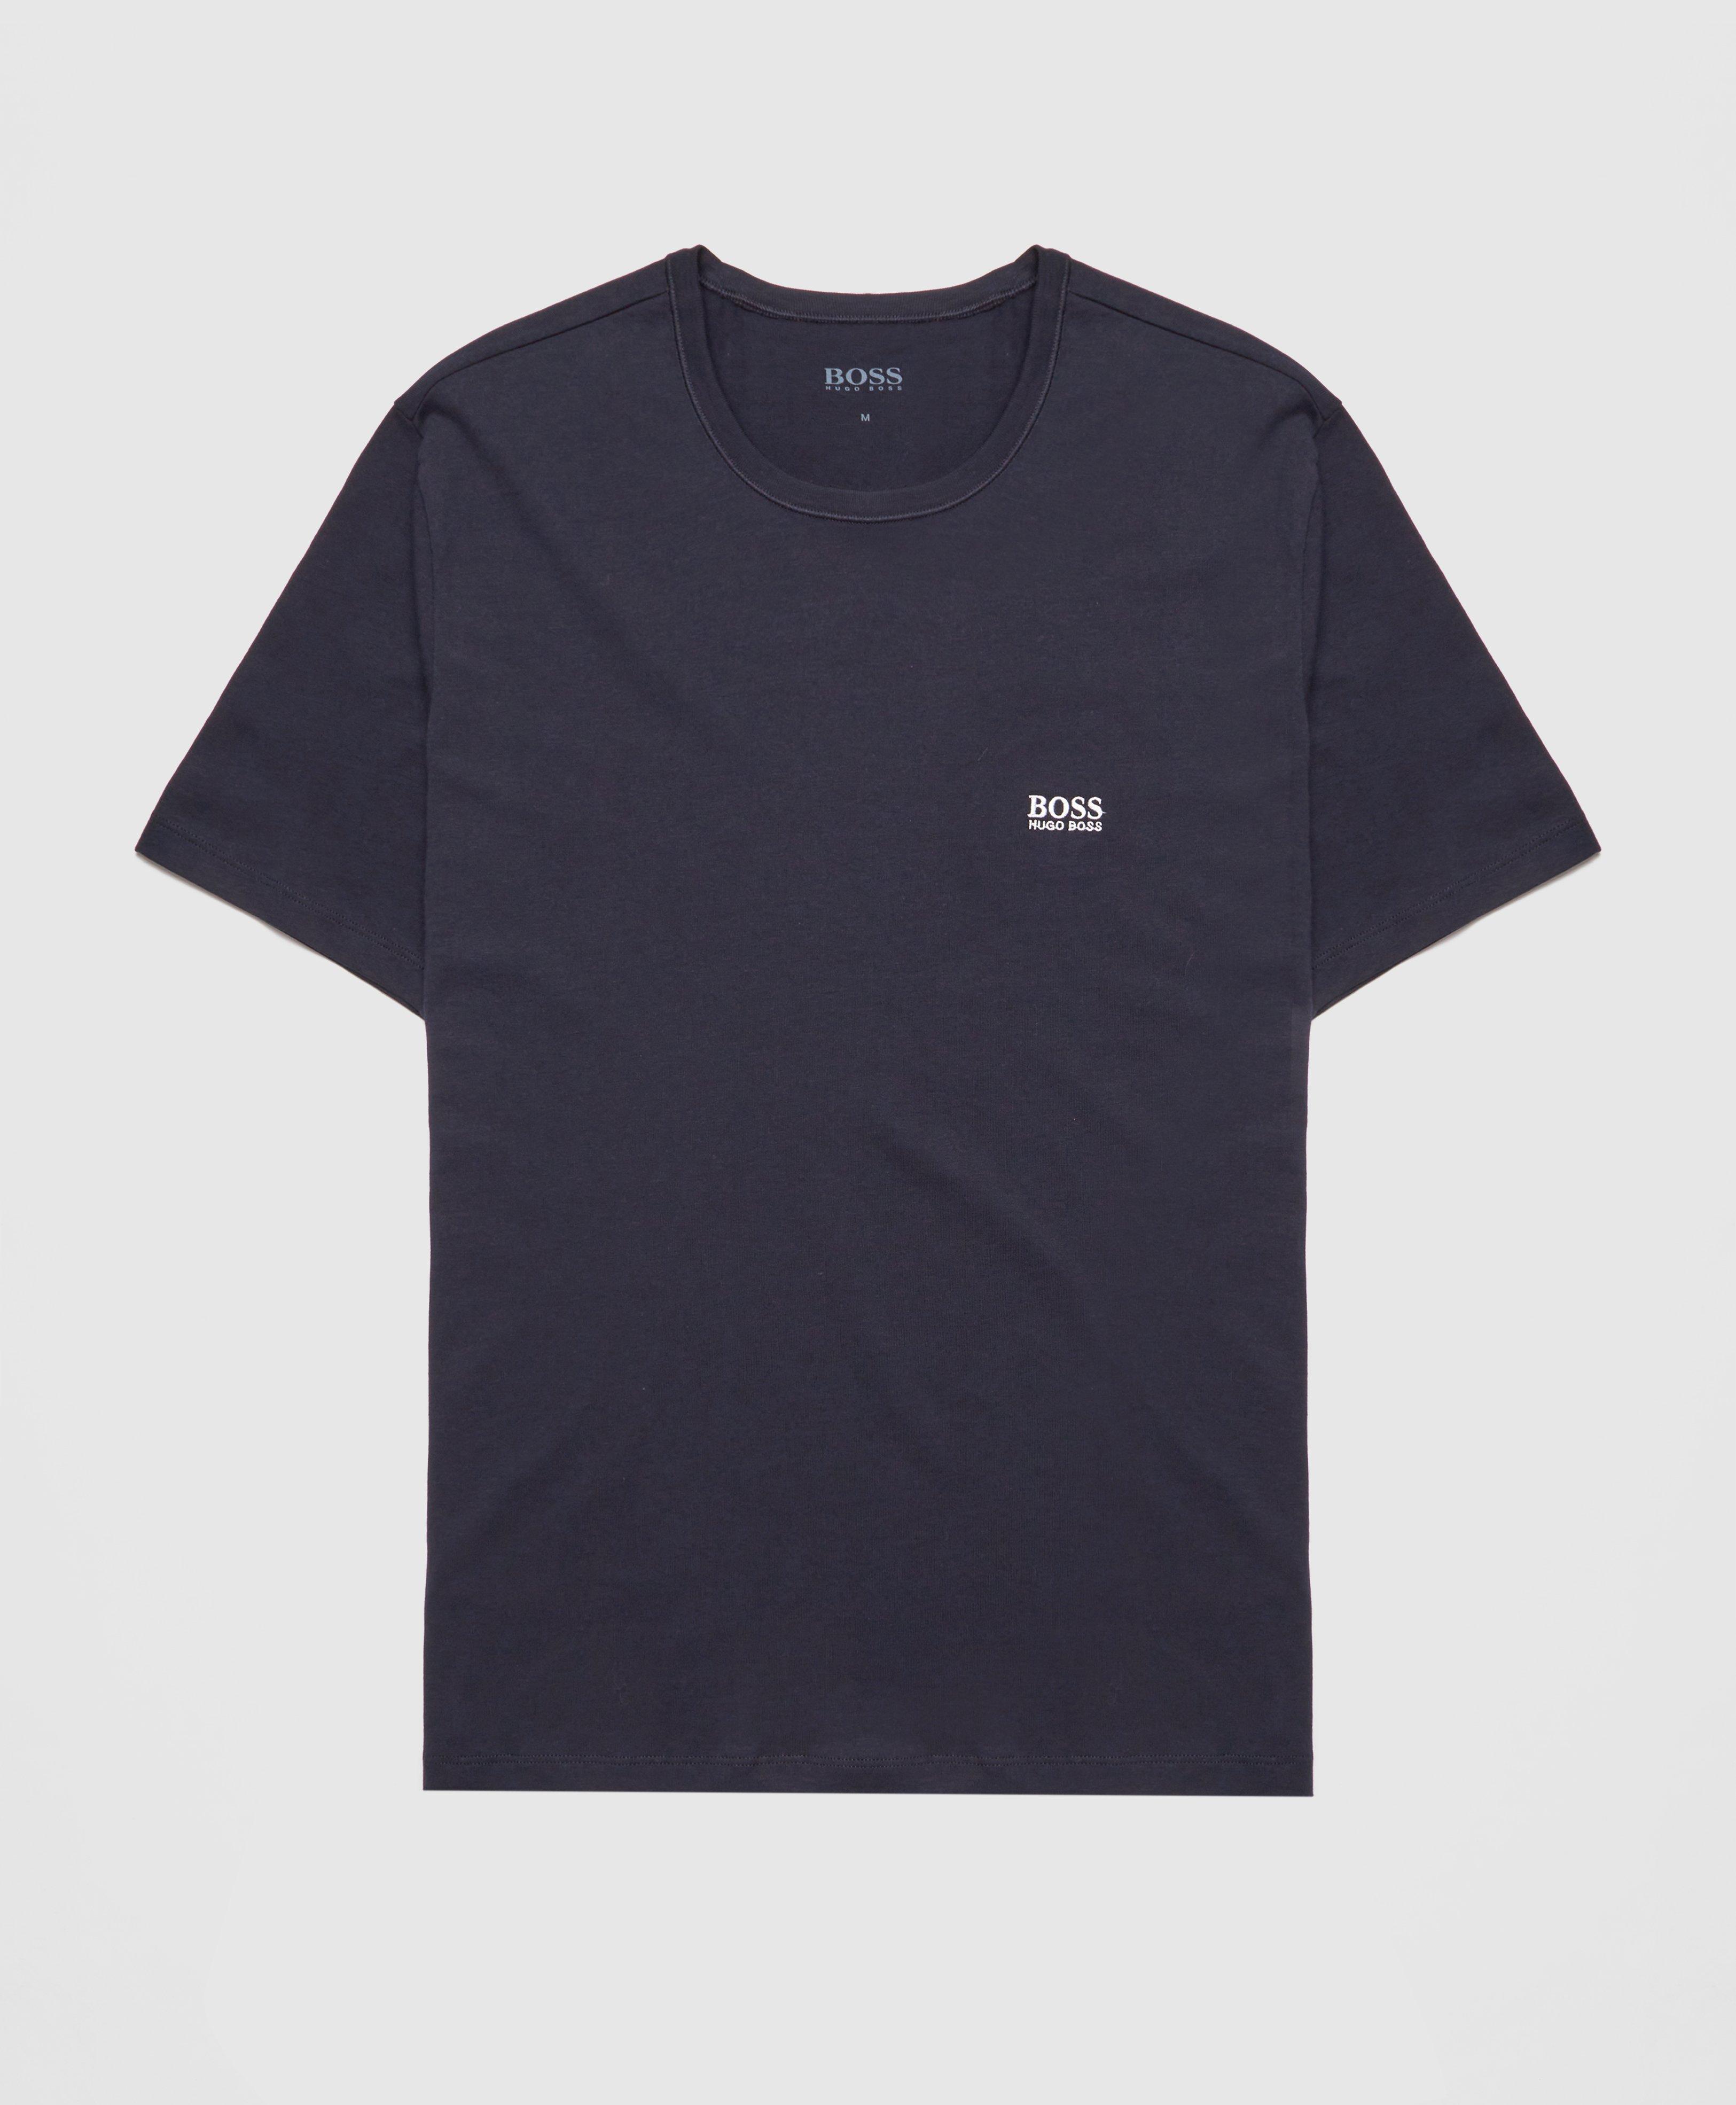 BOSS by Hugo Boss 3-pack Crew Neck T-shirts for Men - Lyst